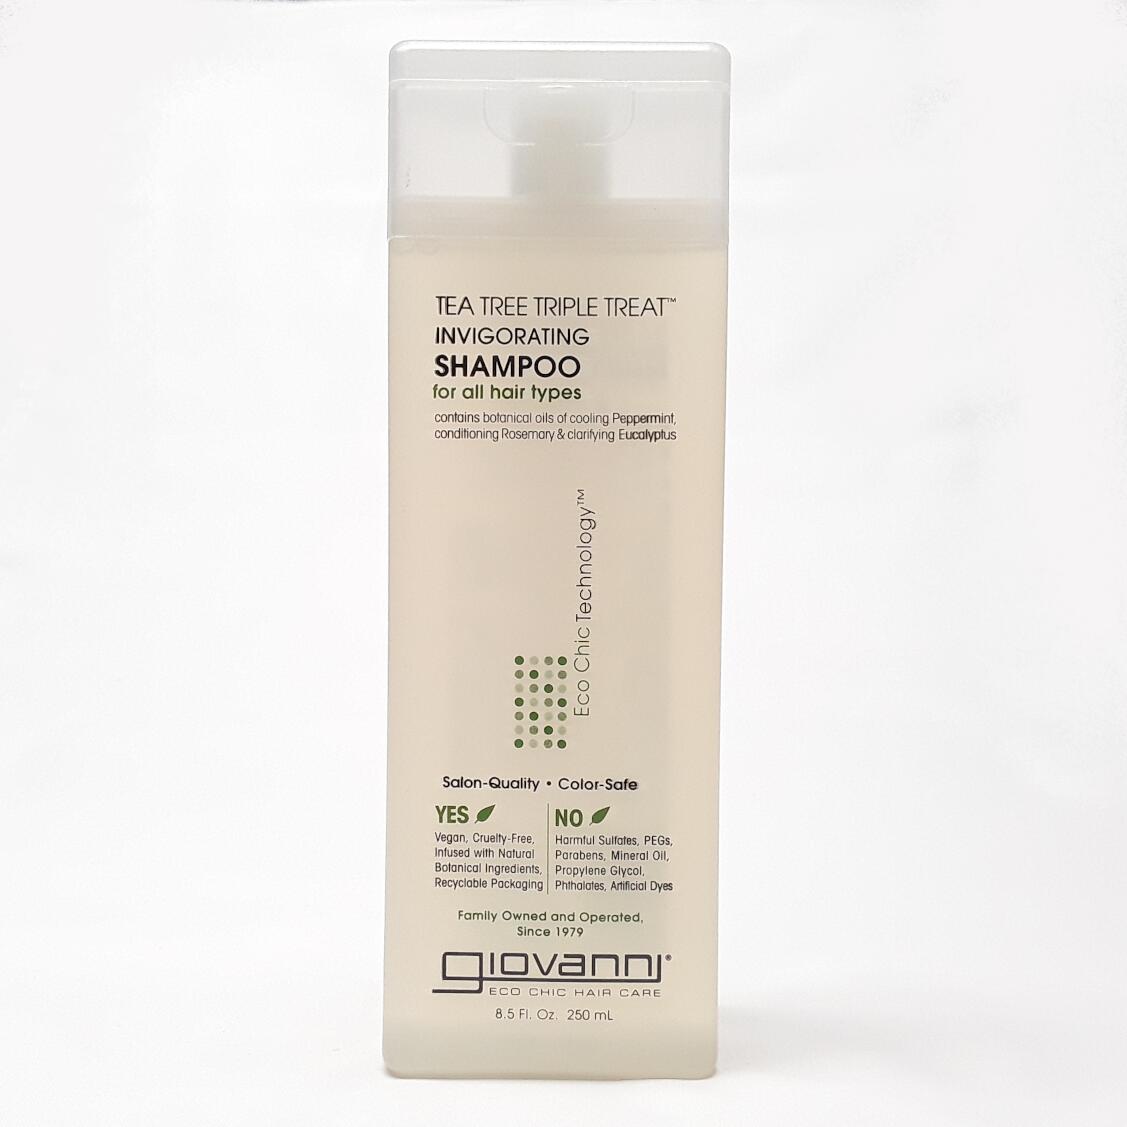 Giovanni Tea Tree Triple Treat Invigorating Shampoo Website Product Image View